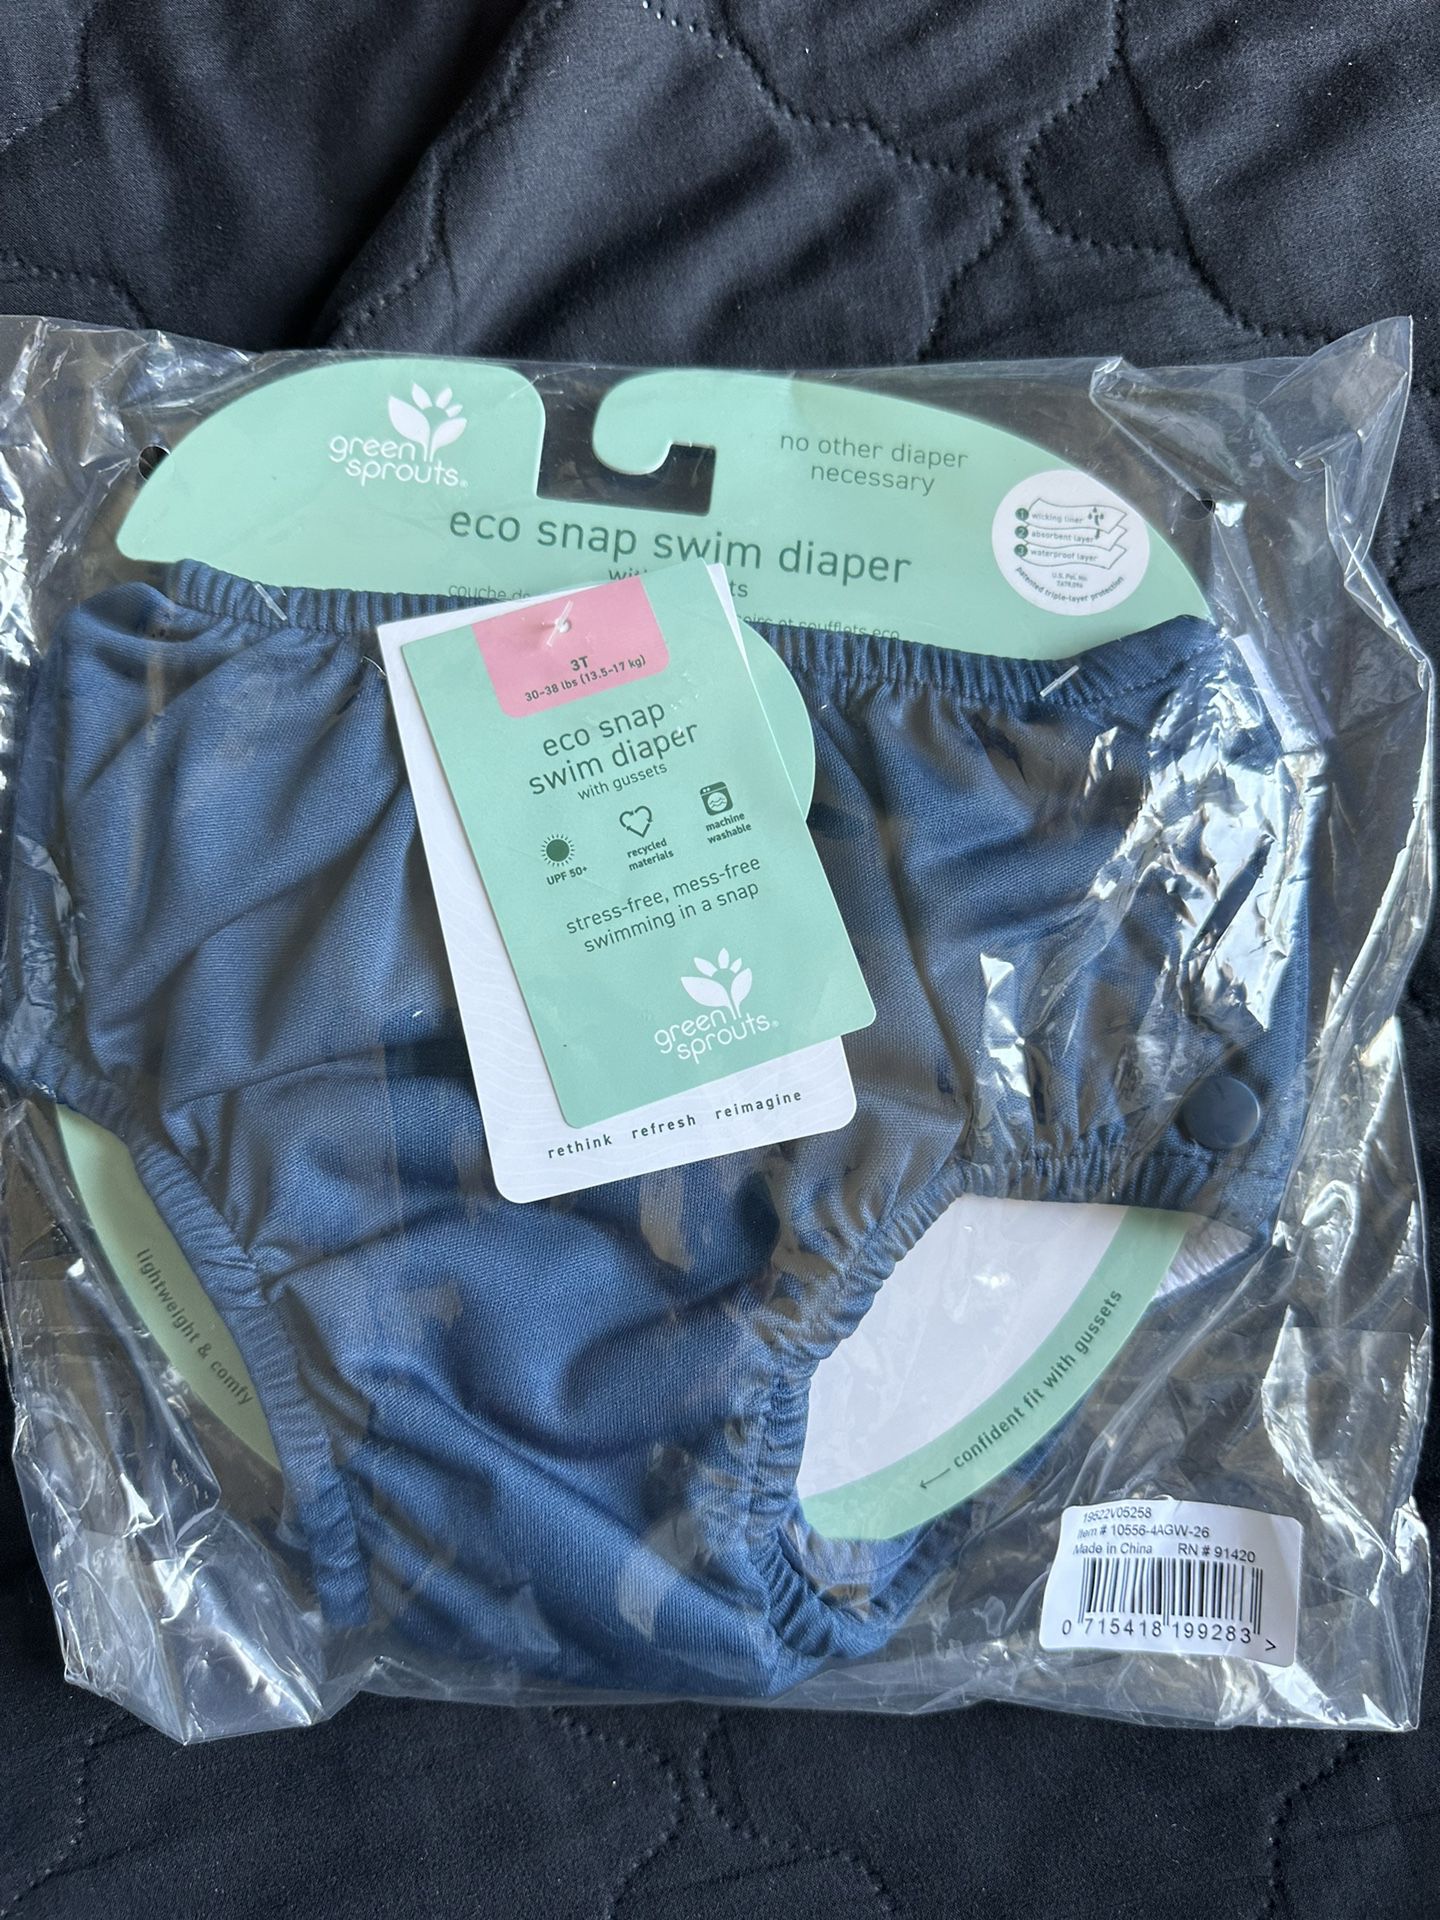 3T Eco Snap Swim Diaper/ Green Sprouts